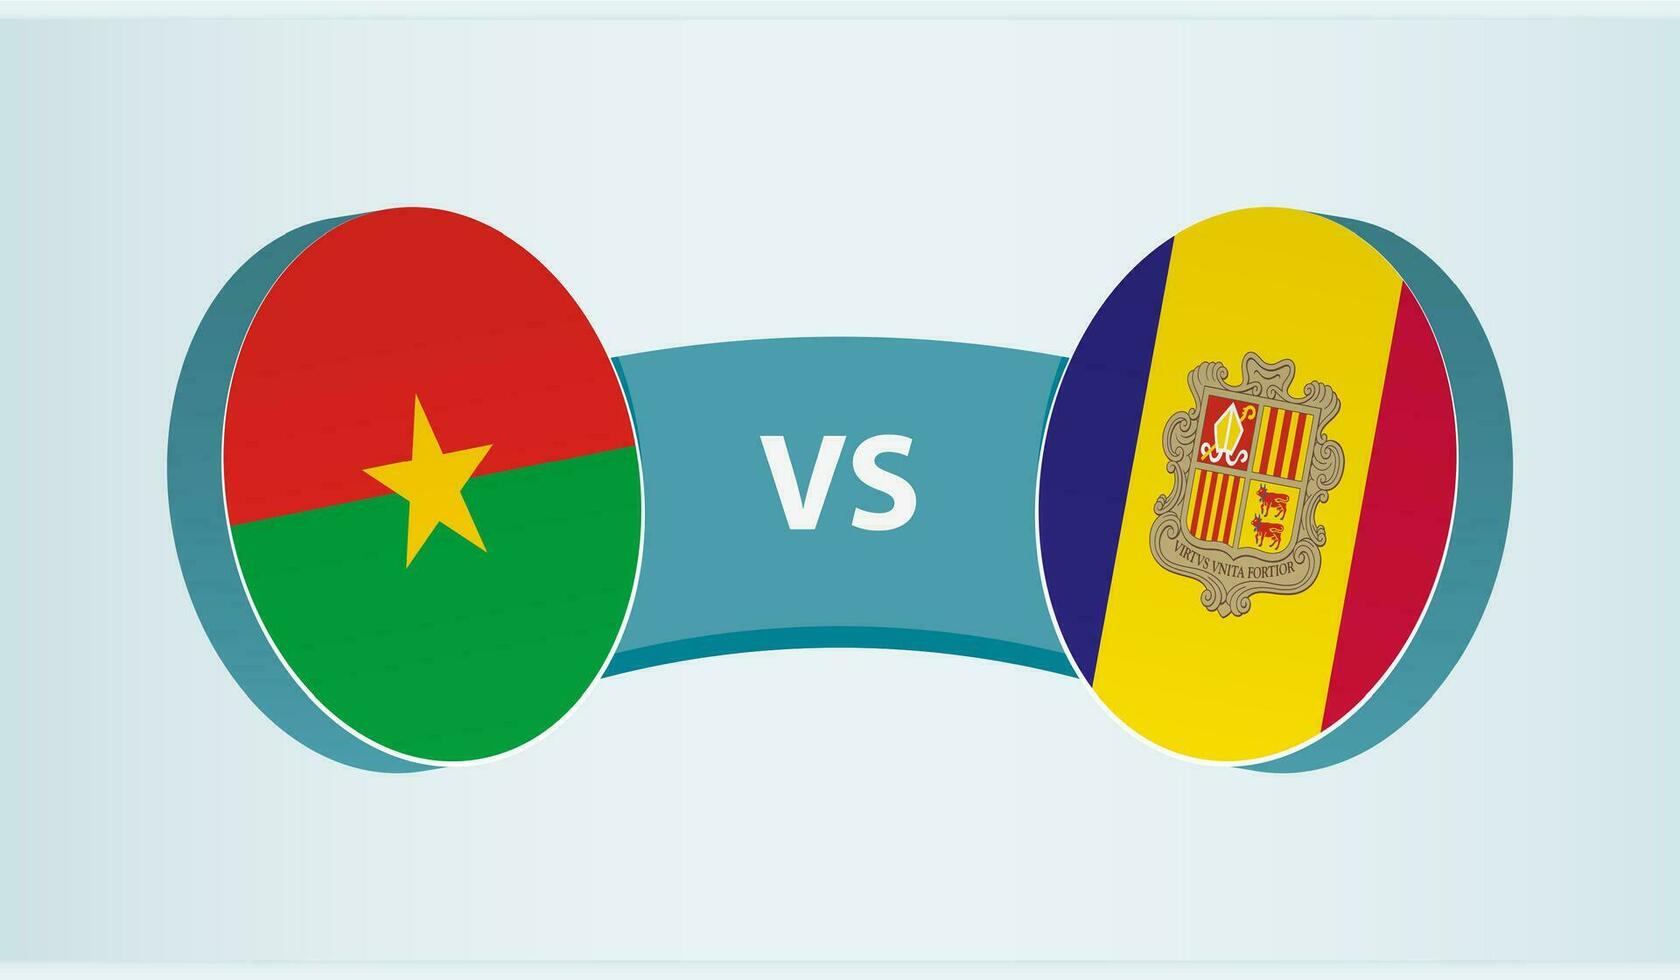 Burkina Faso versus Andorra, team sports competition concept. vector